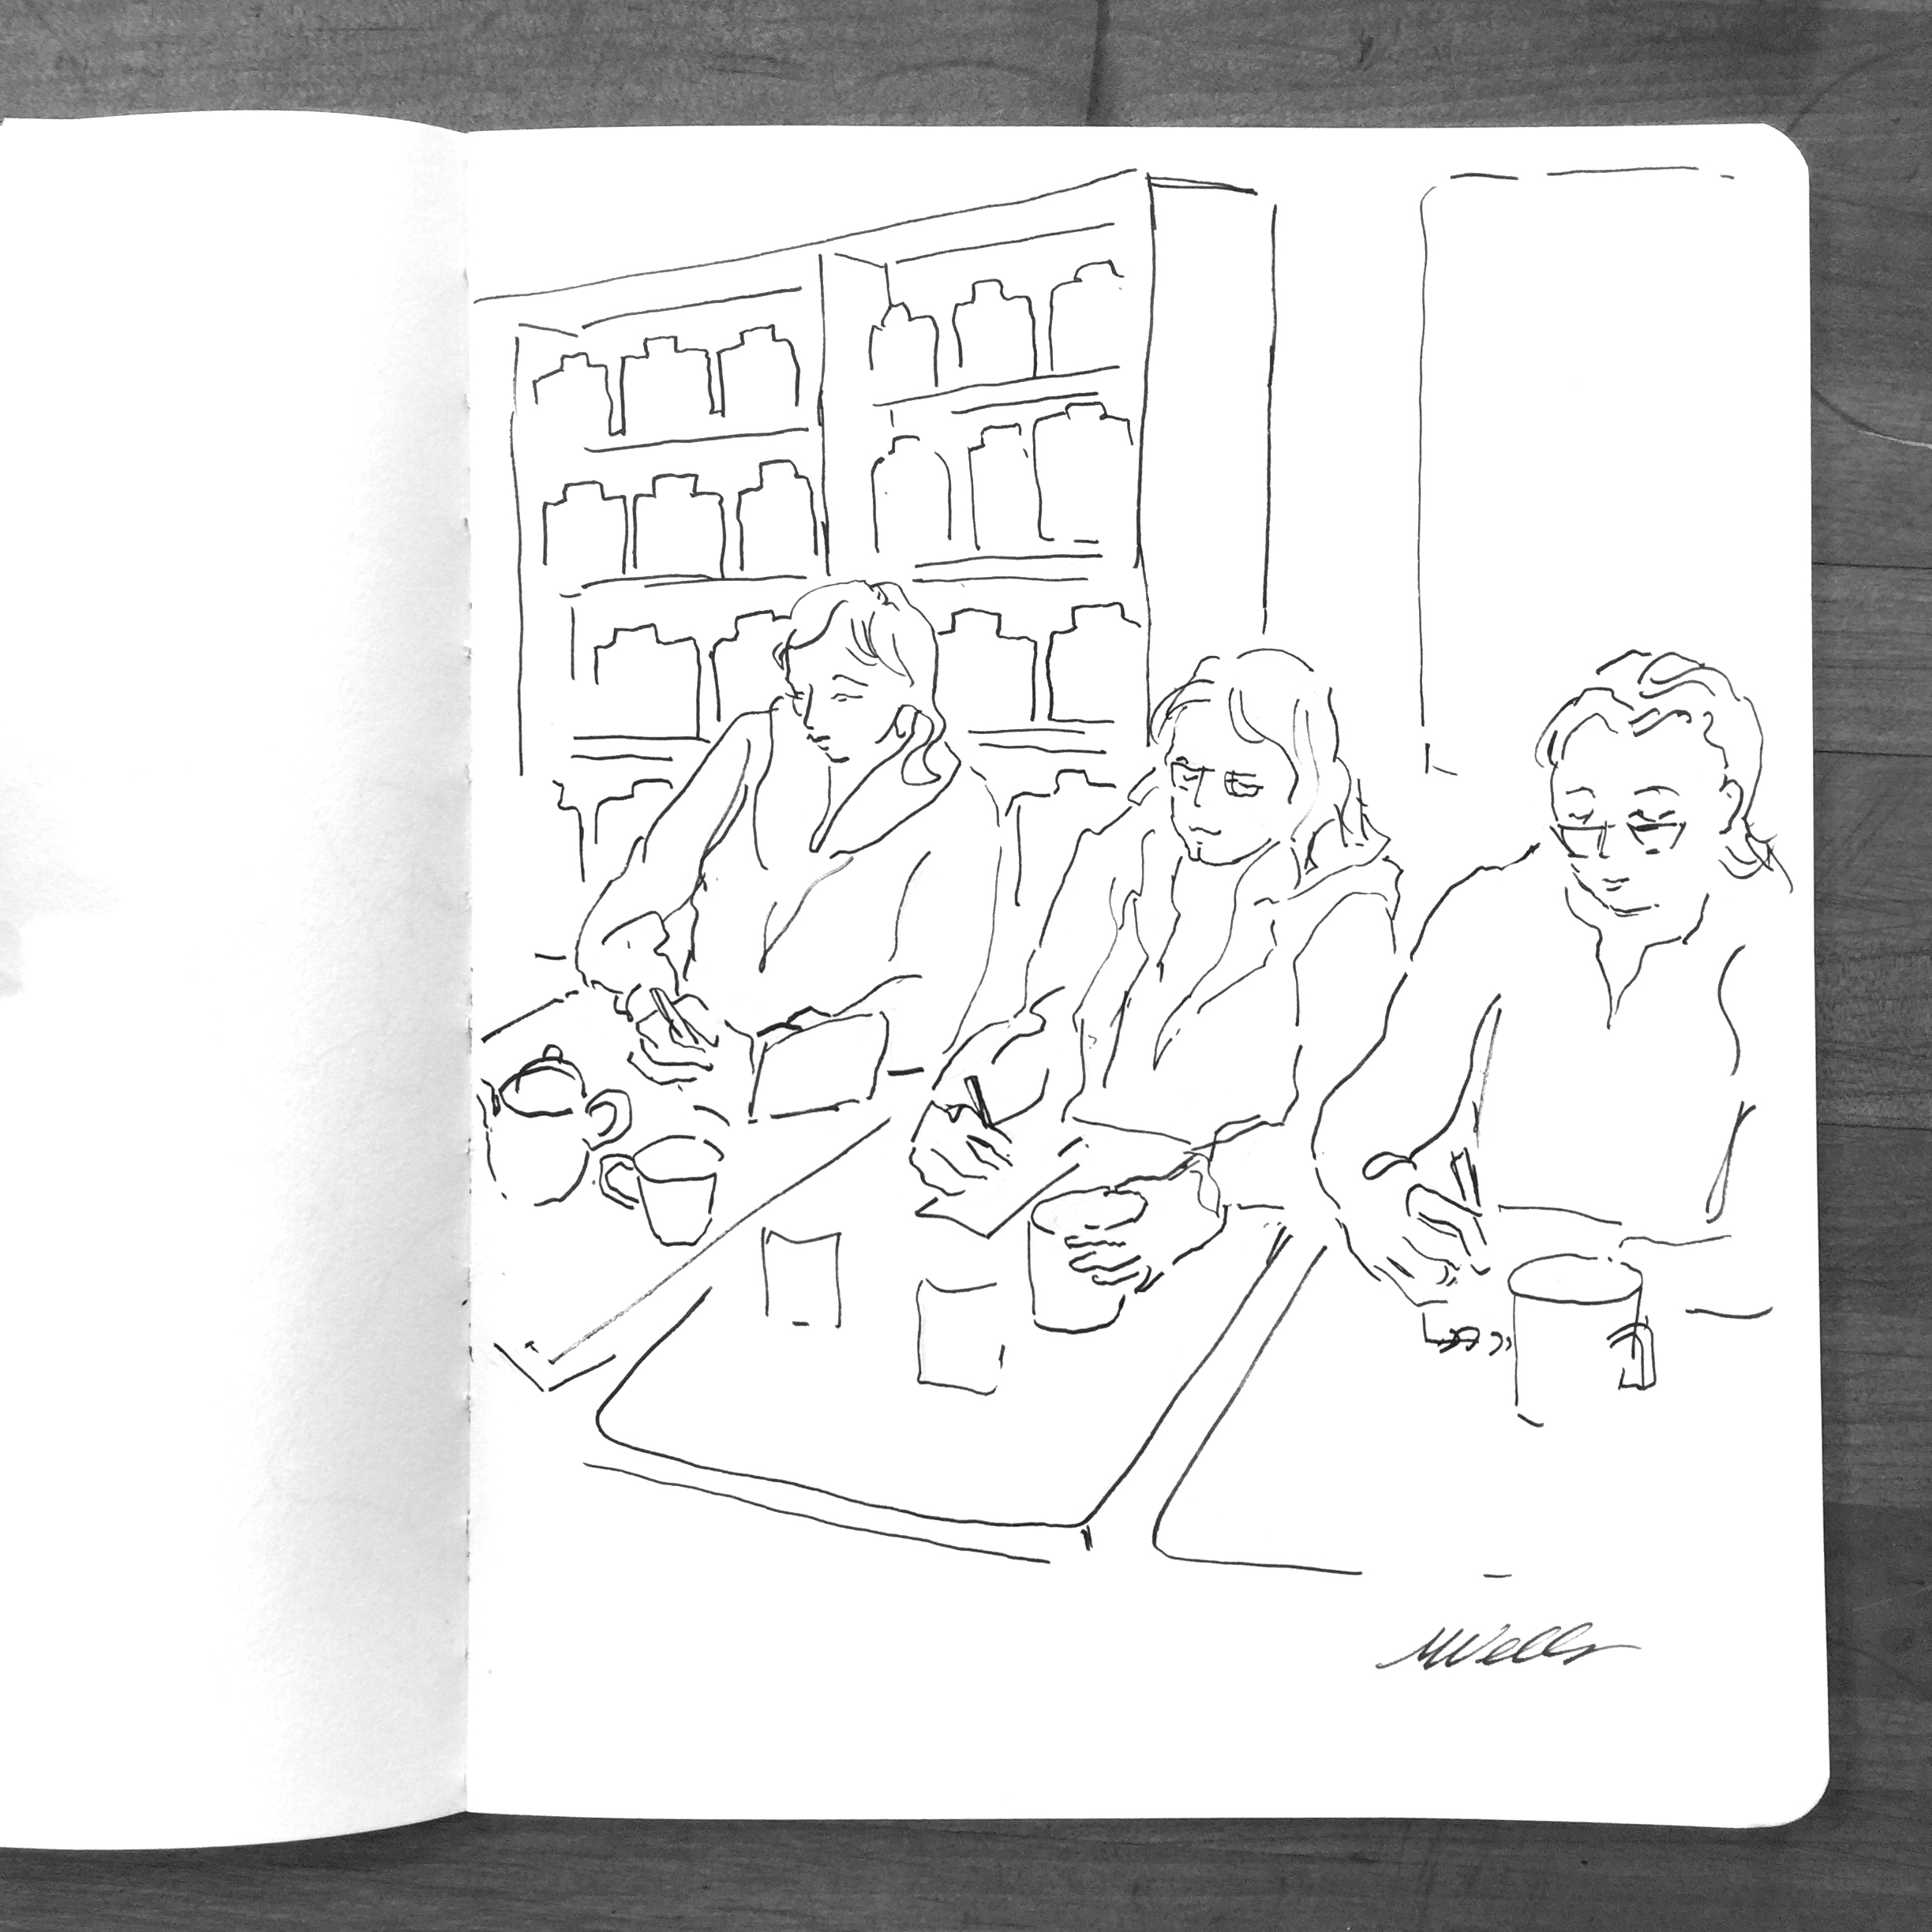 DUS "Capital Tea—3 Sketchers" by Marilyn